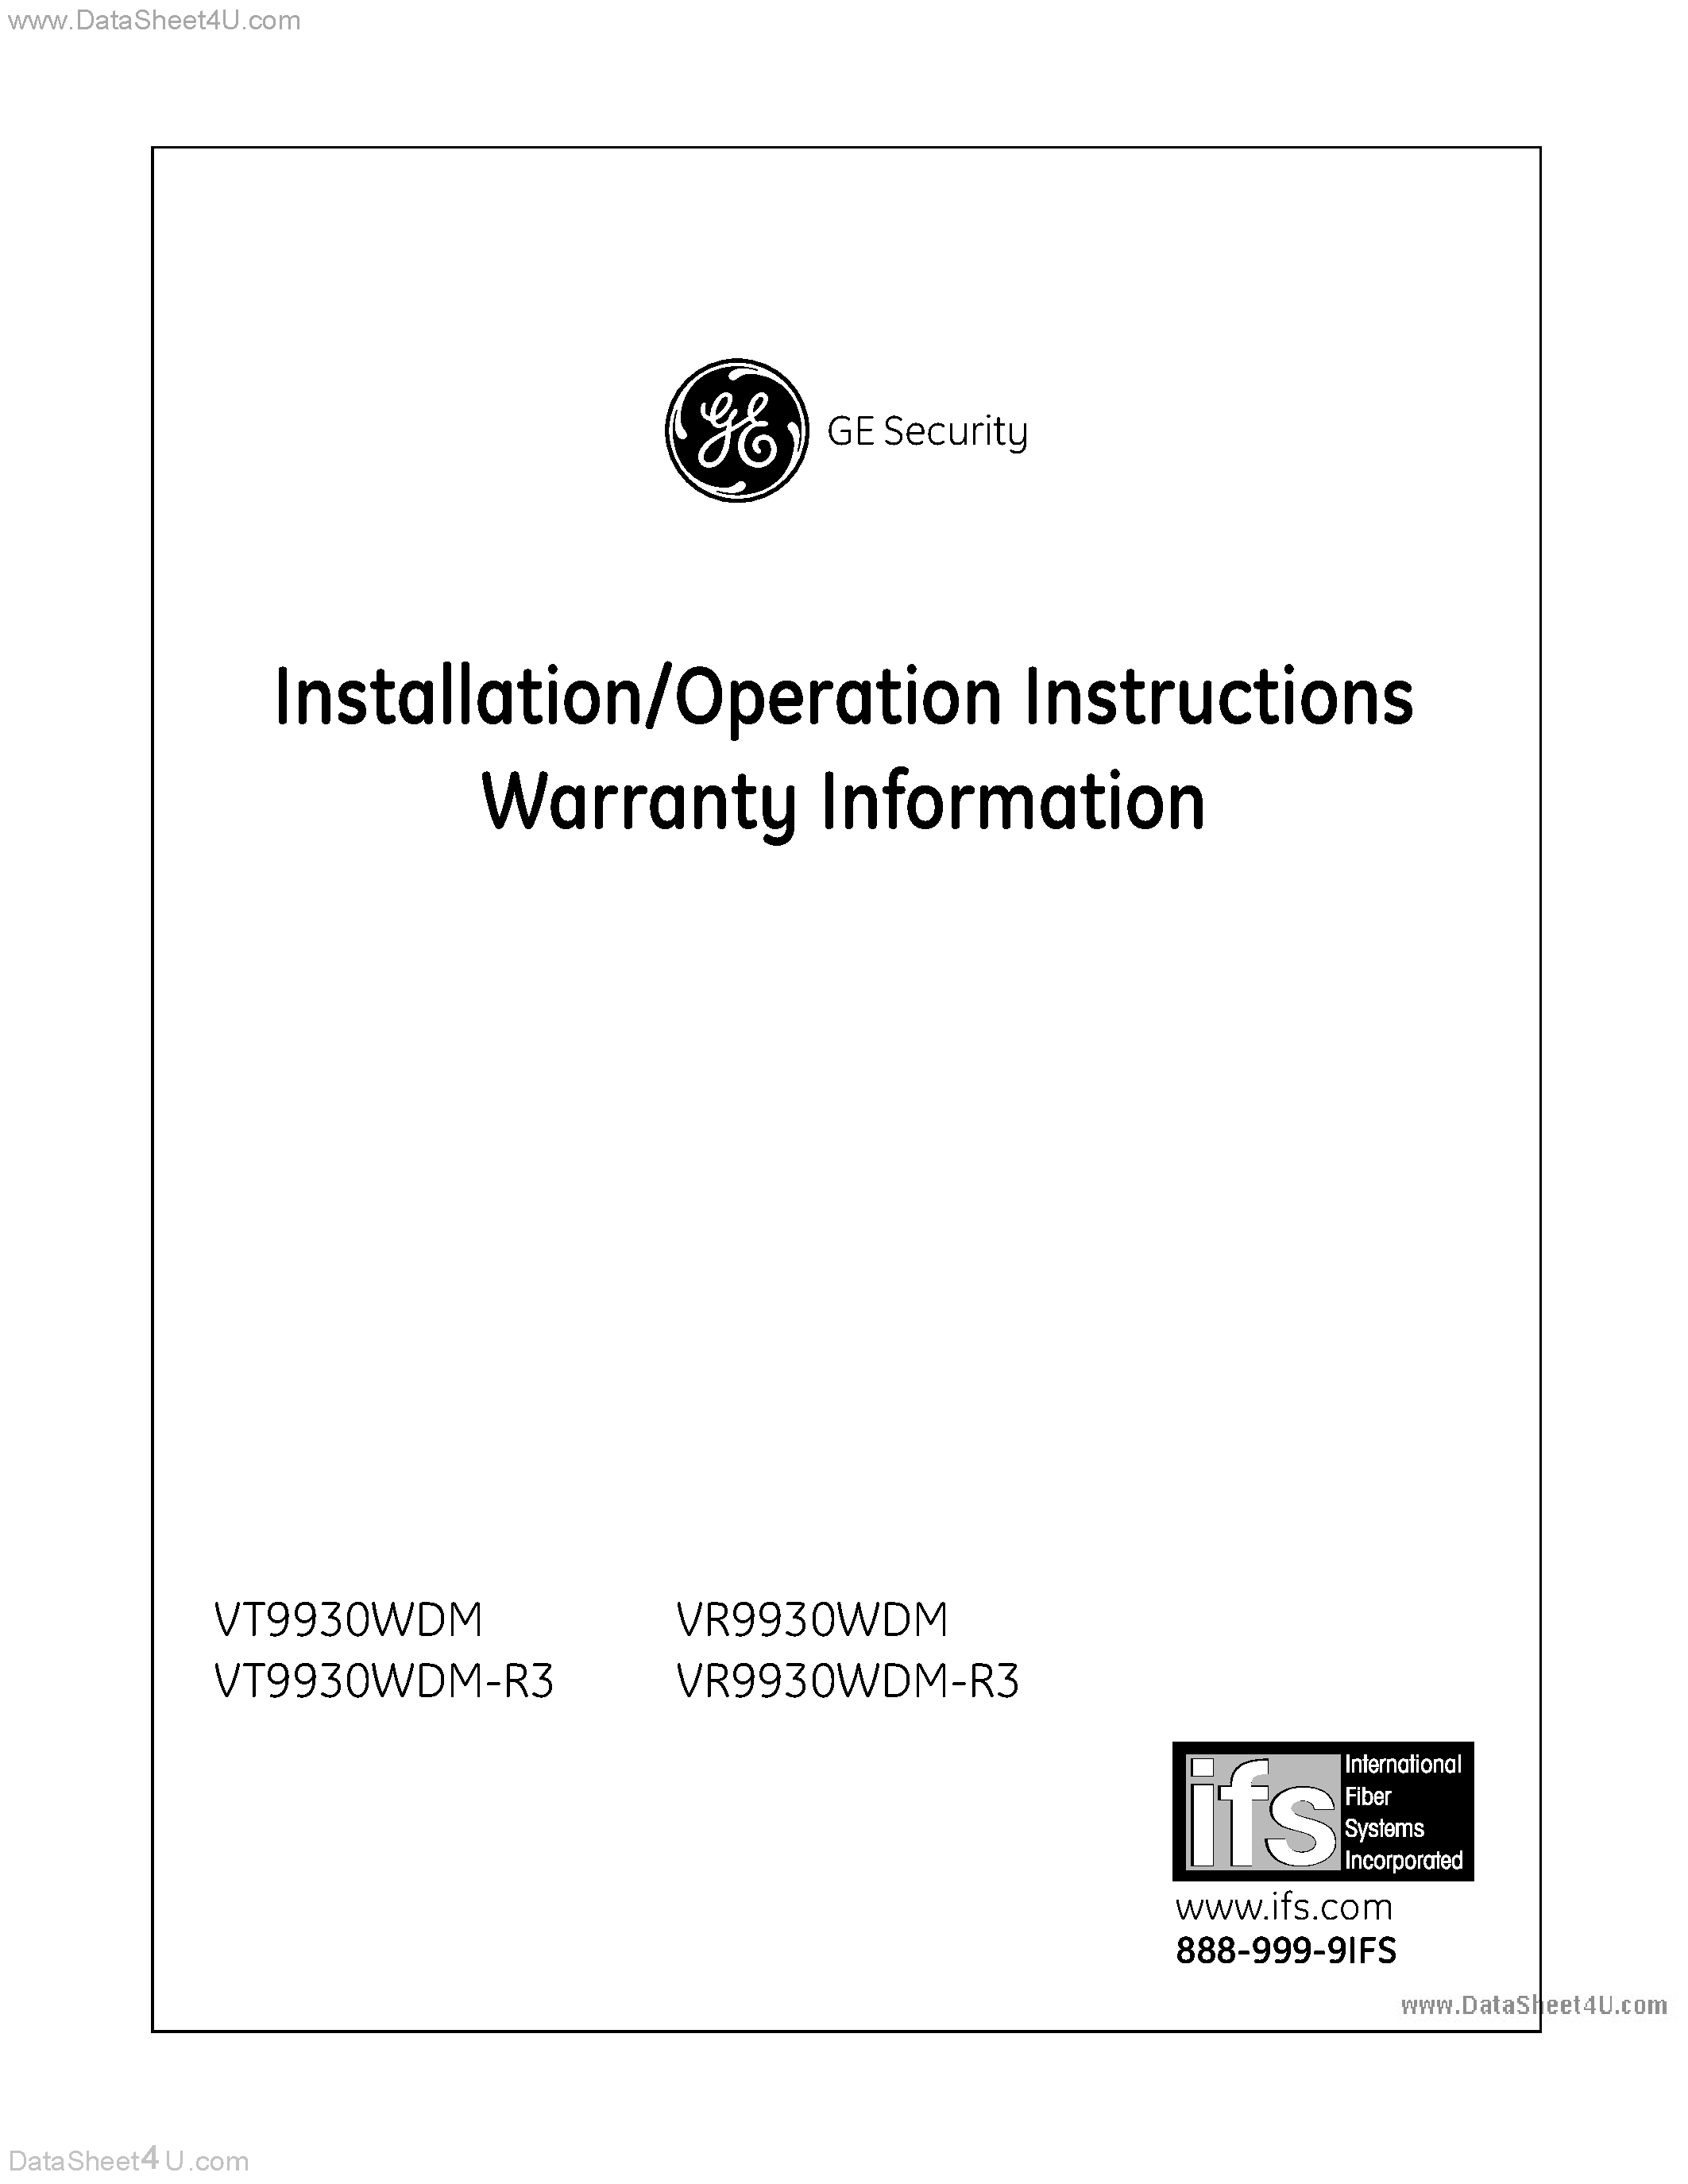 Datasheet VT9930WDM - Installation / Operation Instructions Warranty Information page 1